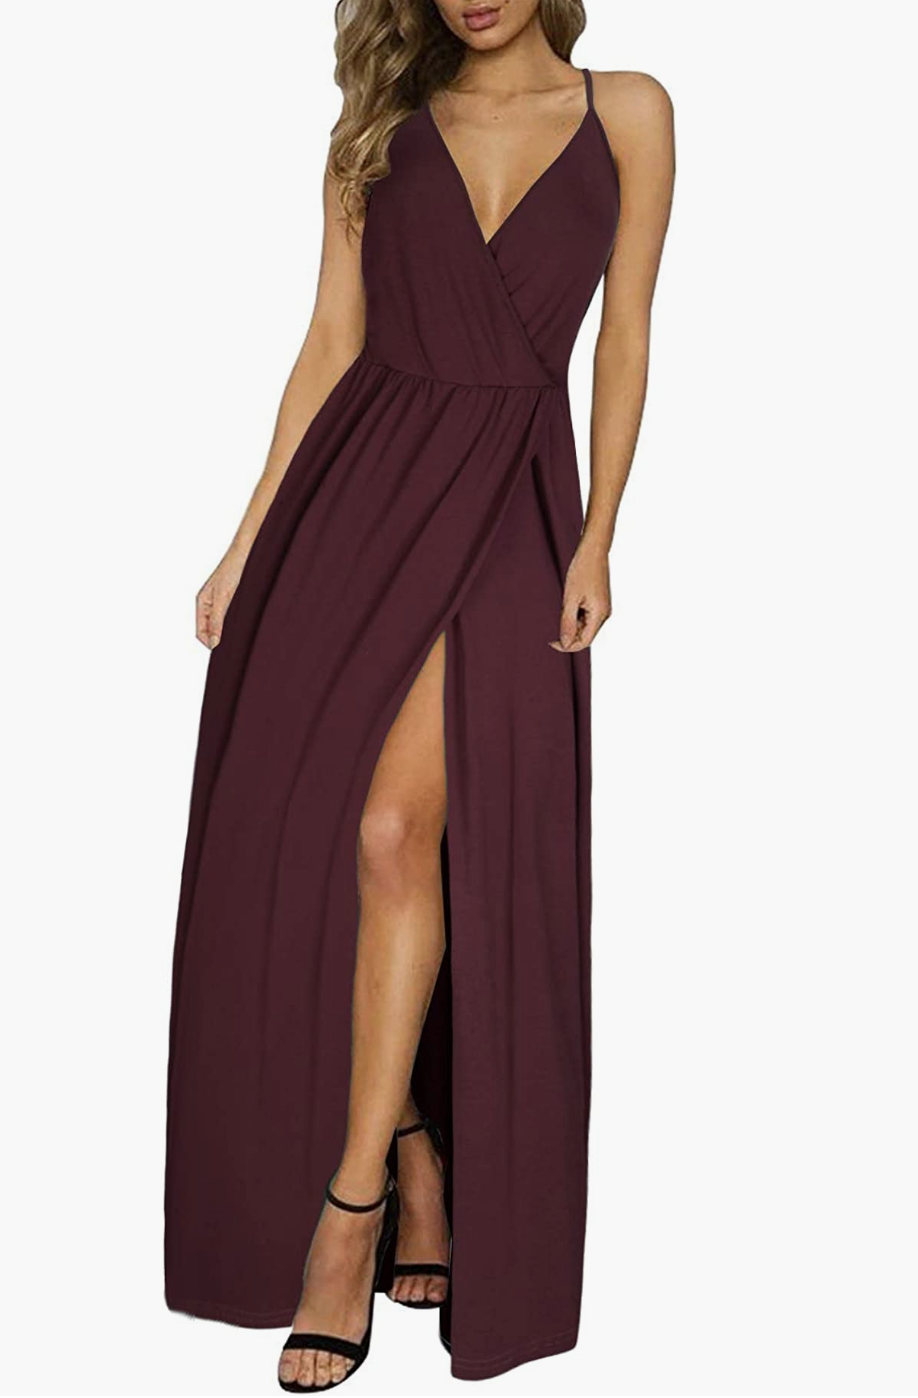 model showing off high slit in dress wearing II ININ V-Neck Backless Maxi Dress in dark red (Photo via Amazon)